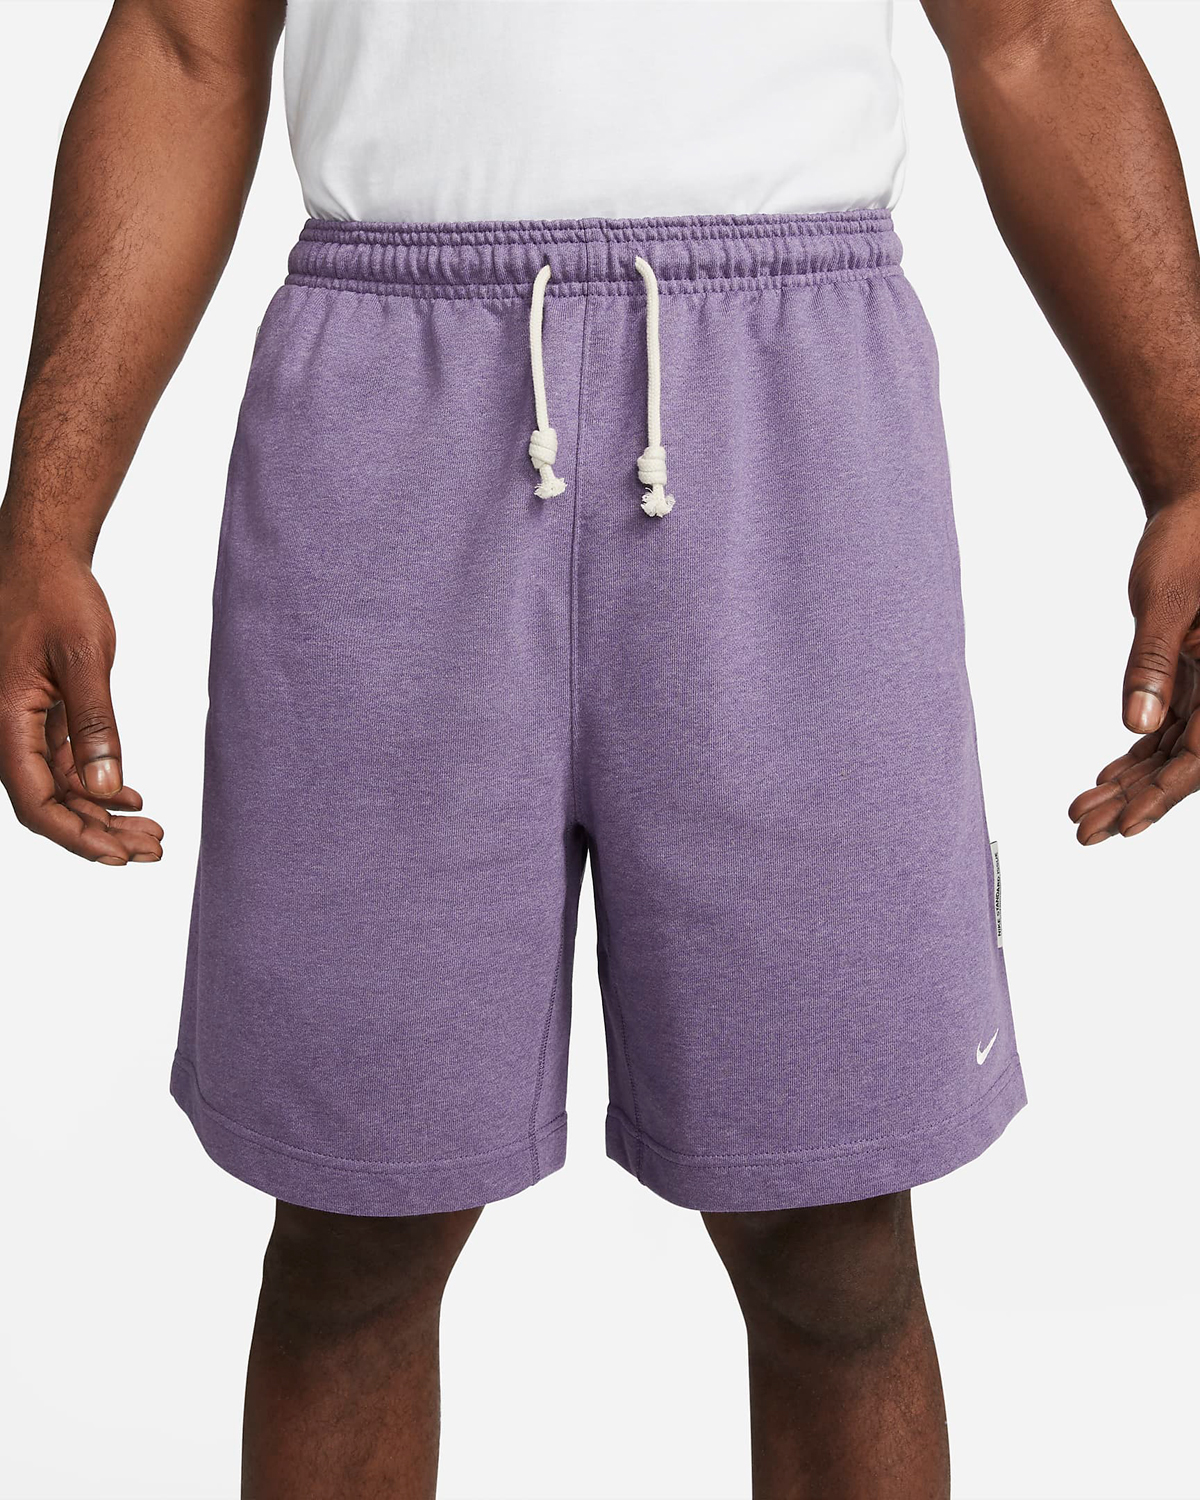 Nike-Standard-Issue-Shorts-Canyon-Purple